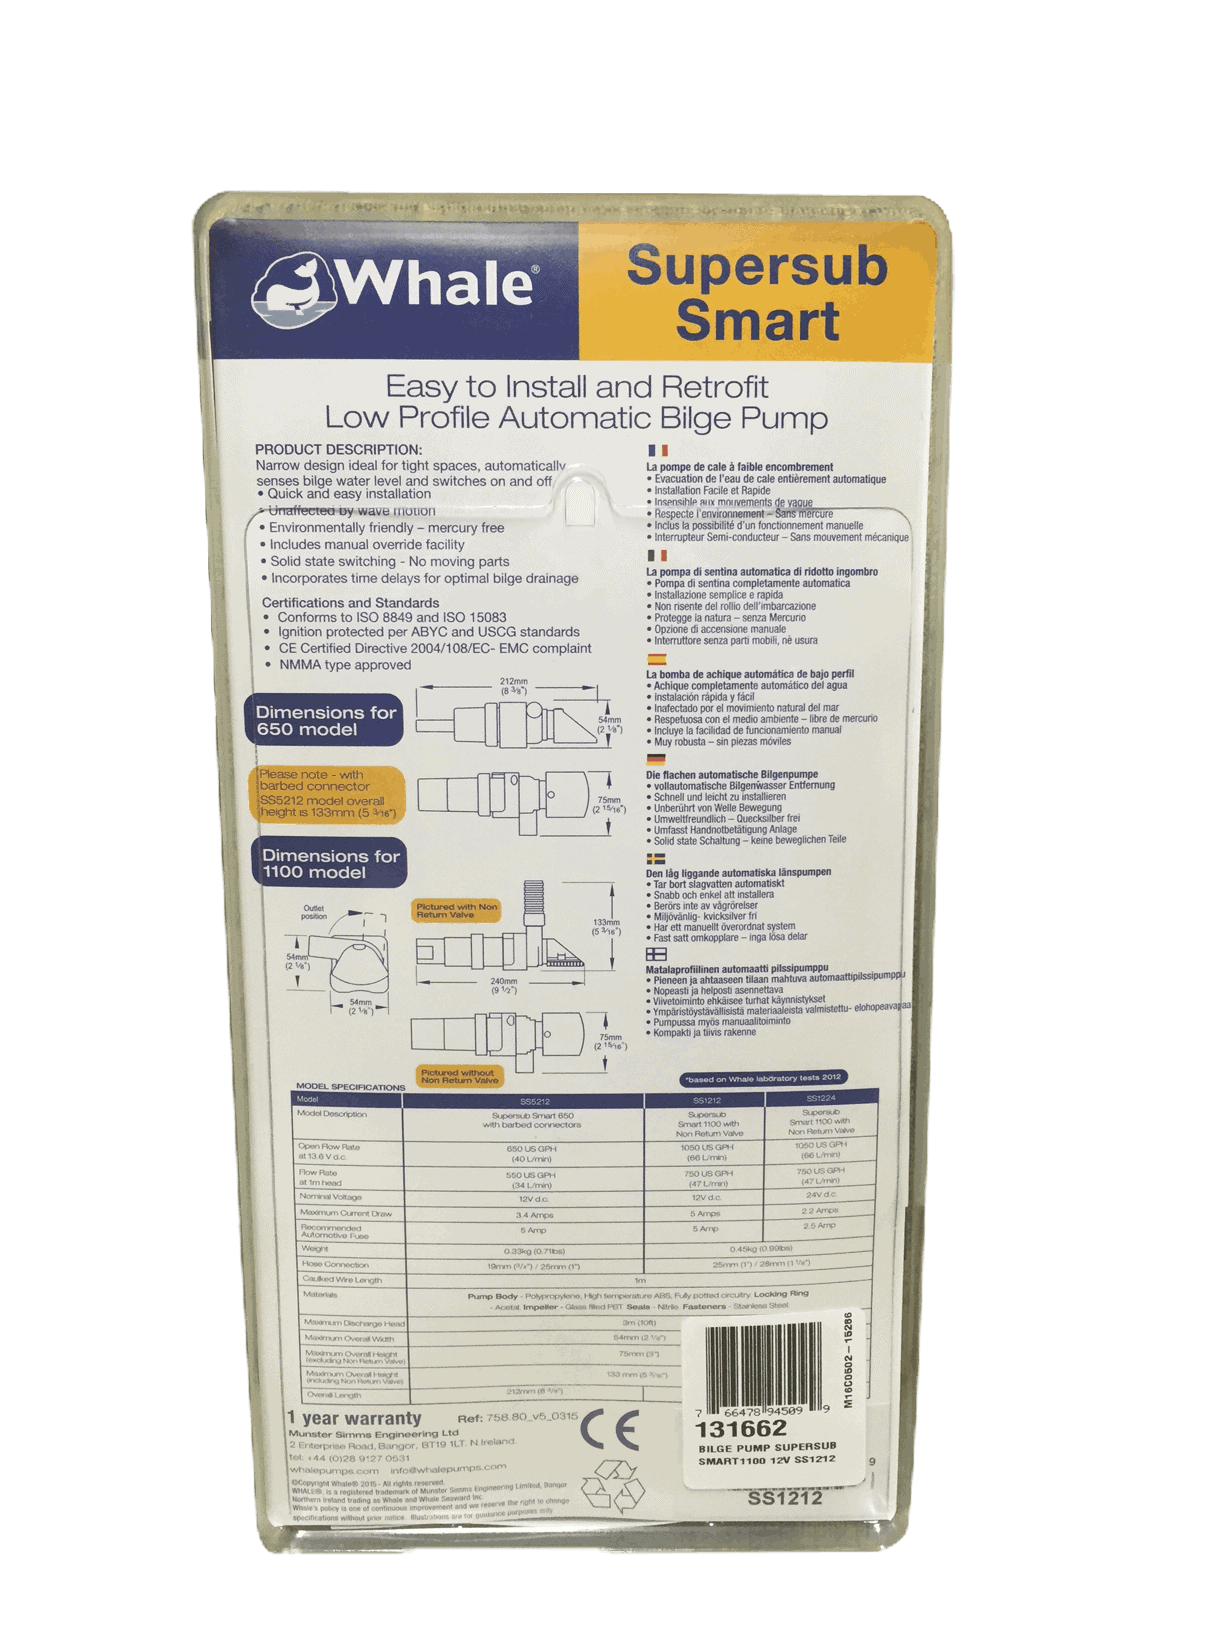 Whale Supersub Smart Bilge Pump 1100 - 12 volt (SS1212)